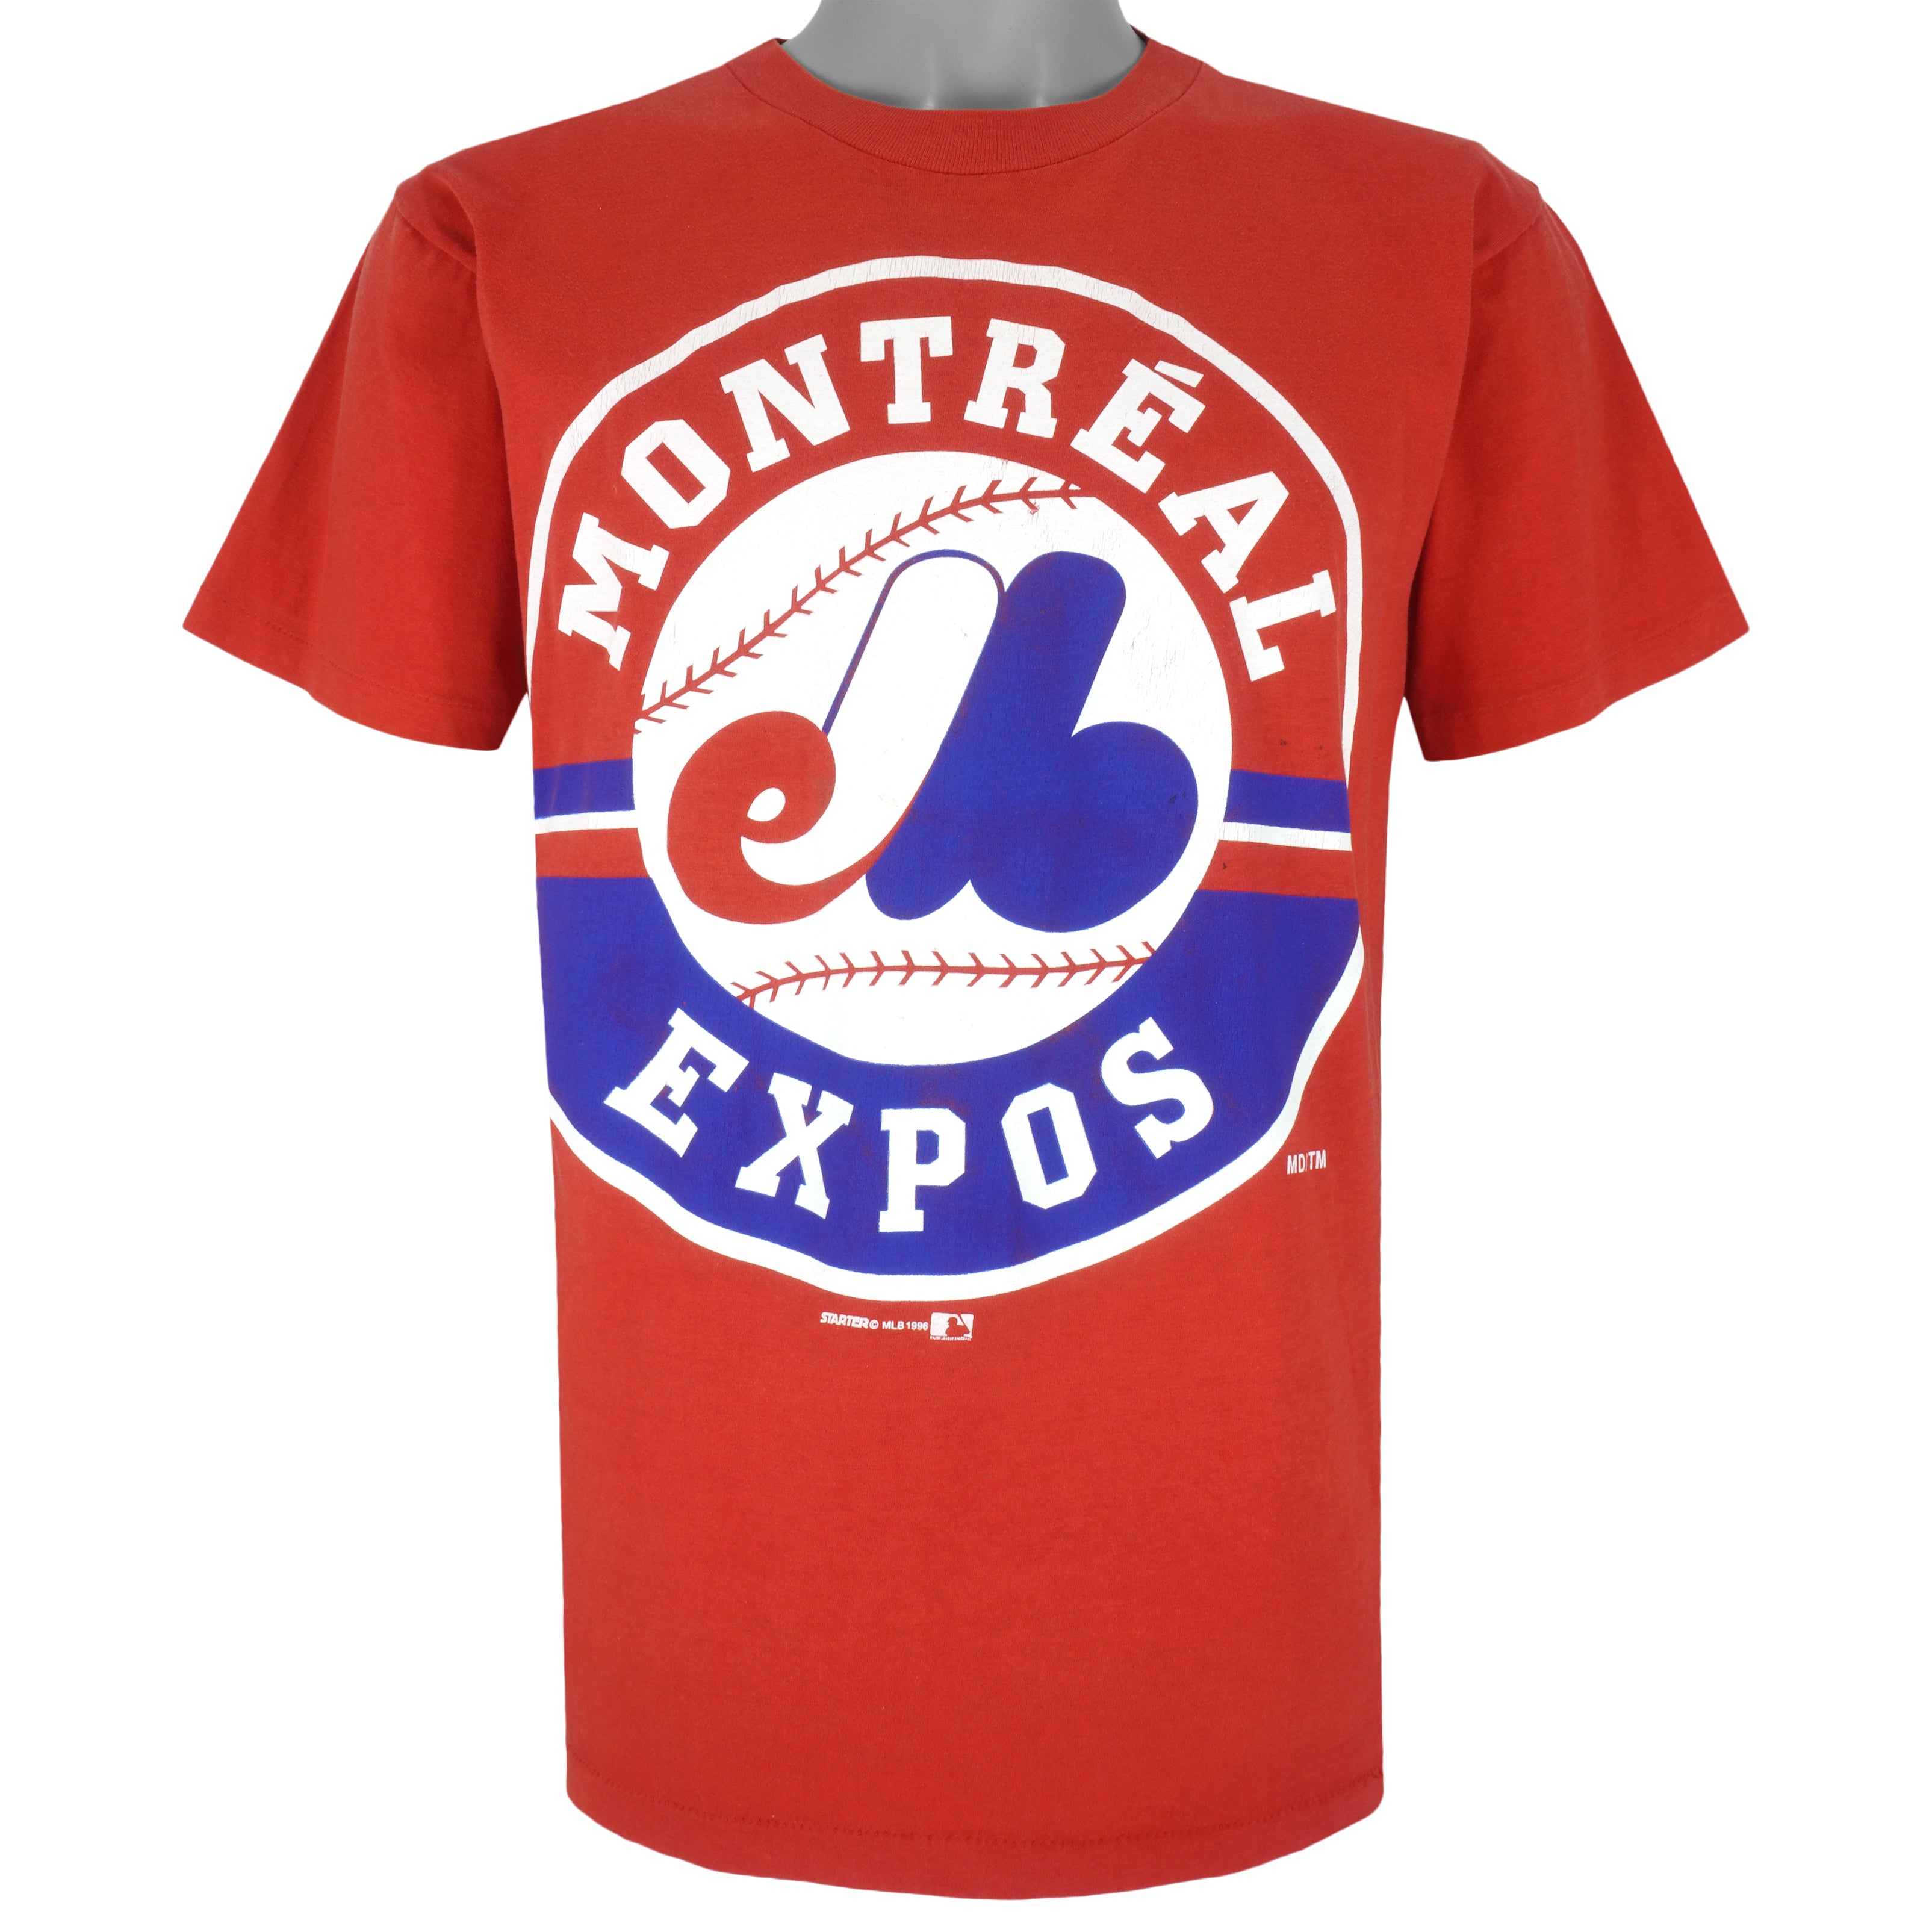 Vintage Montreal Expos Jacket